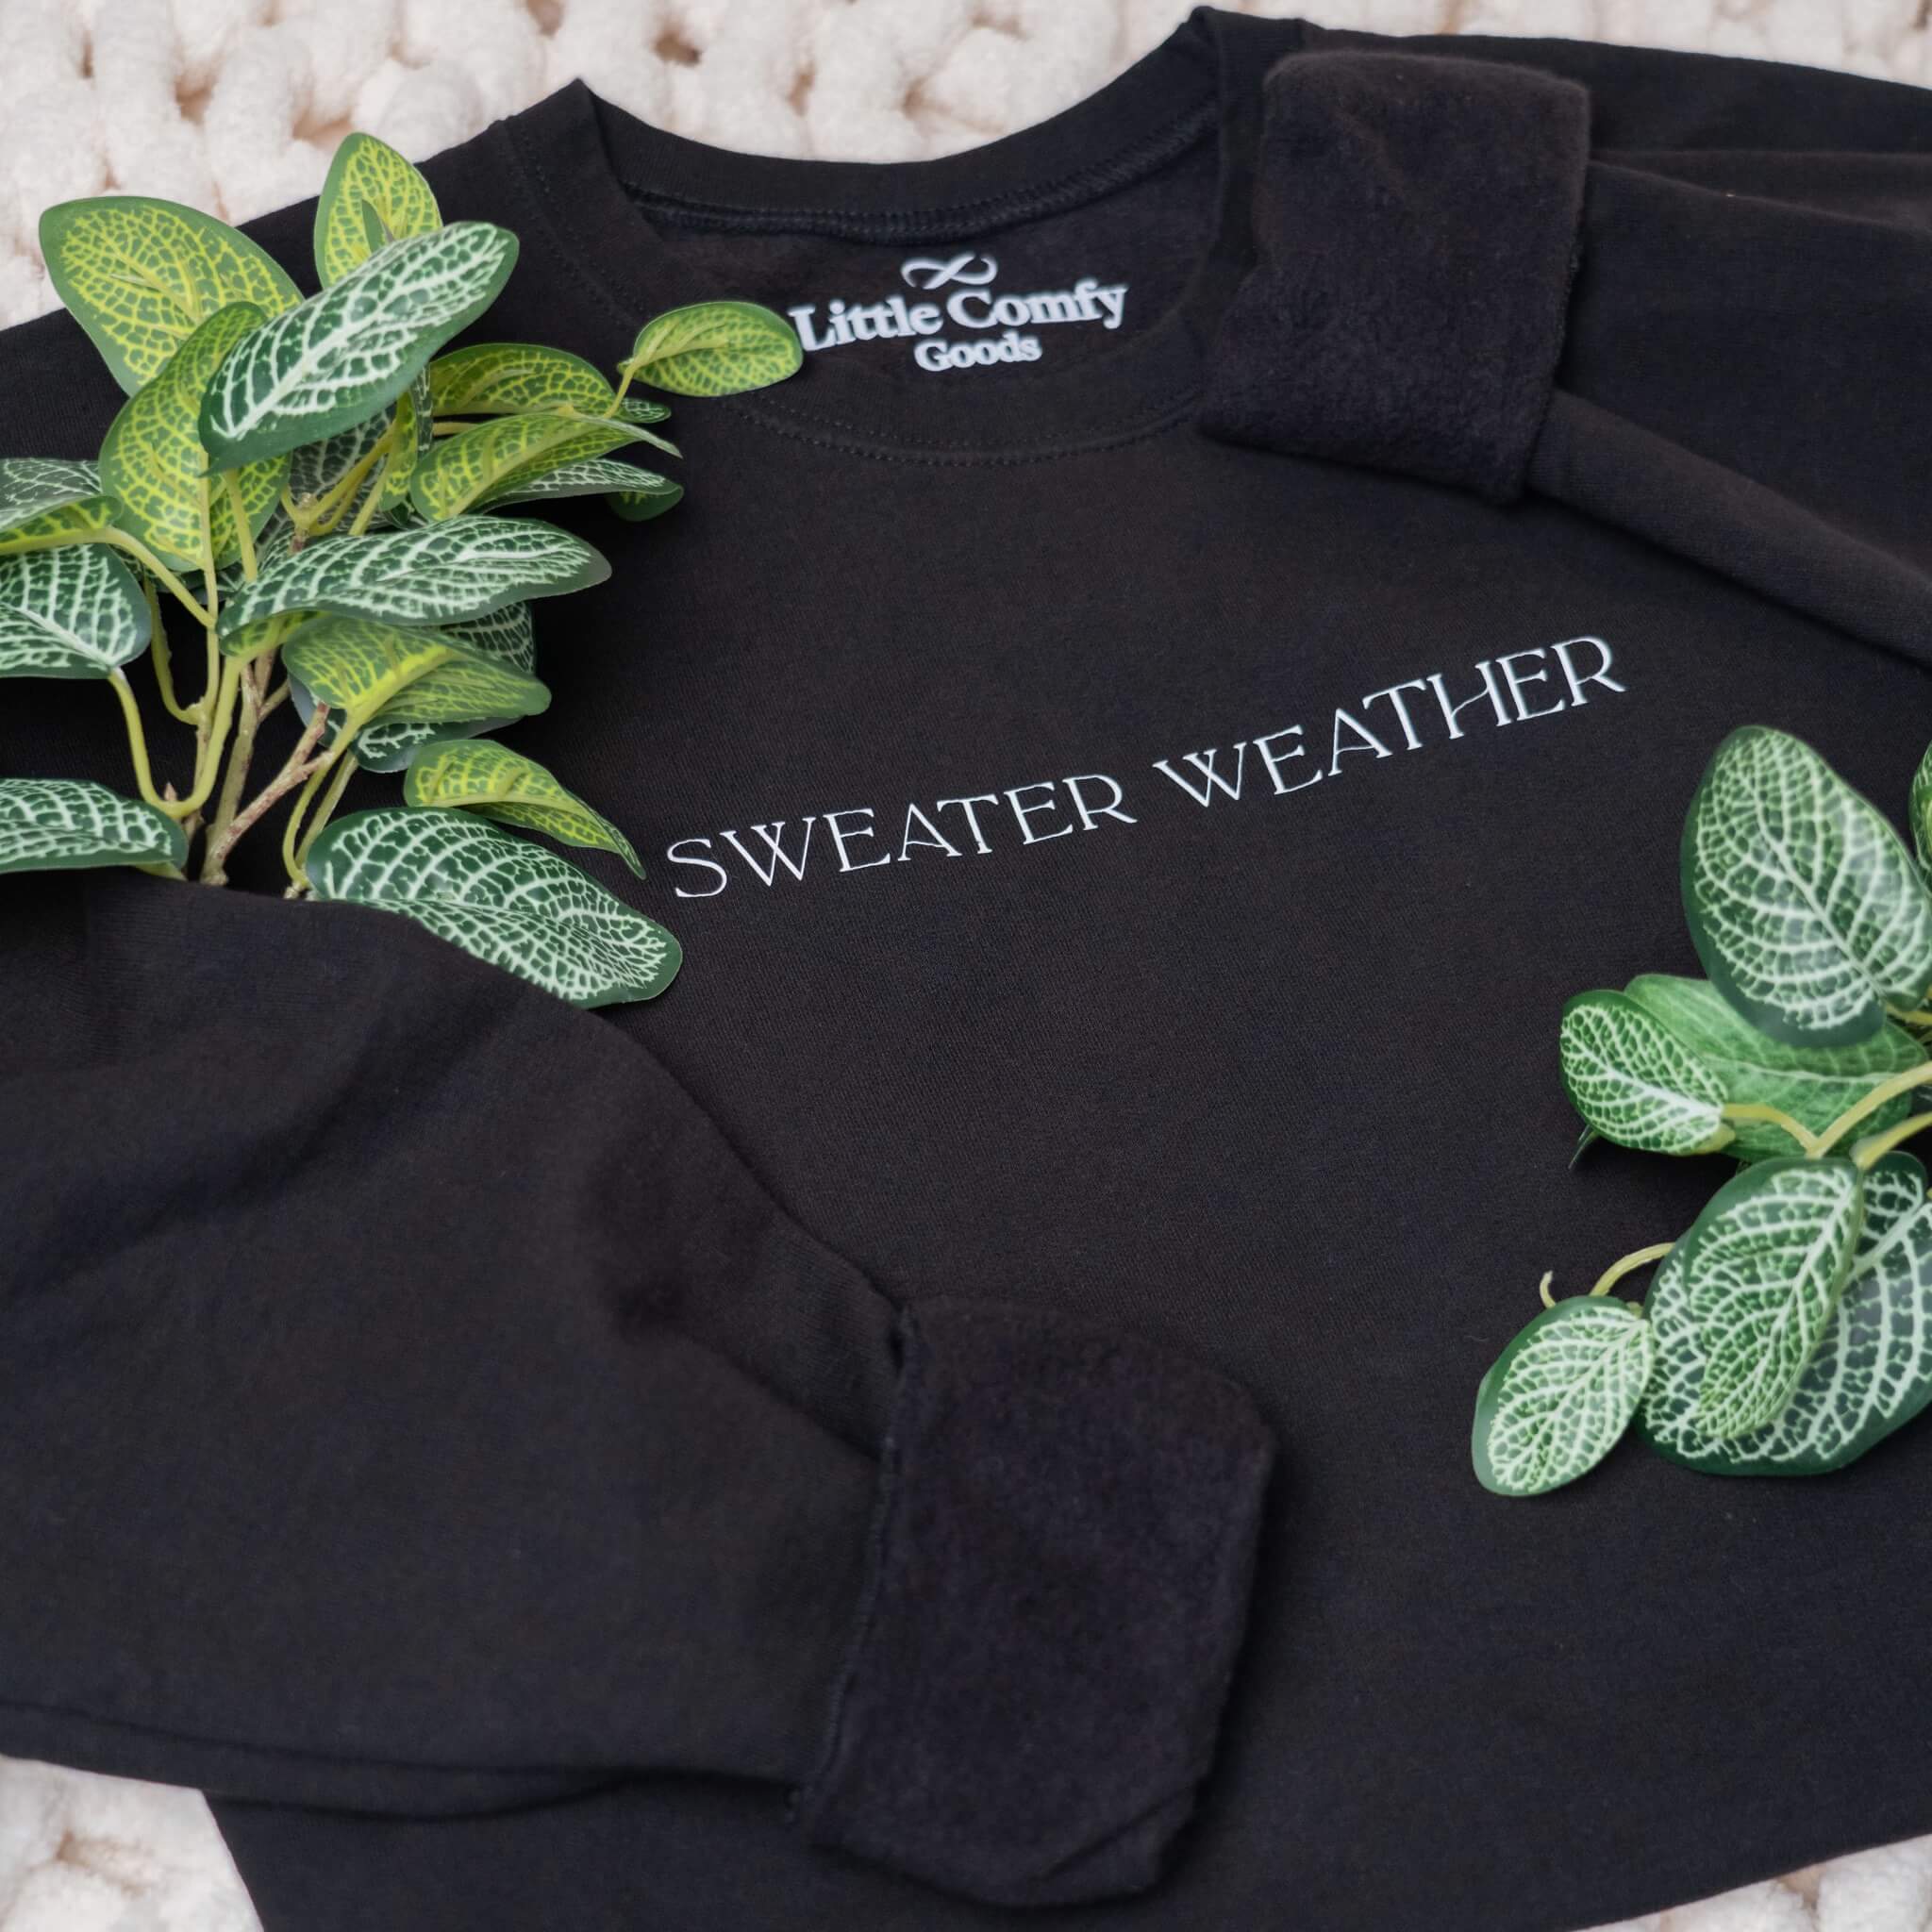 Sweater Weather Crewneck